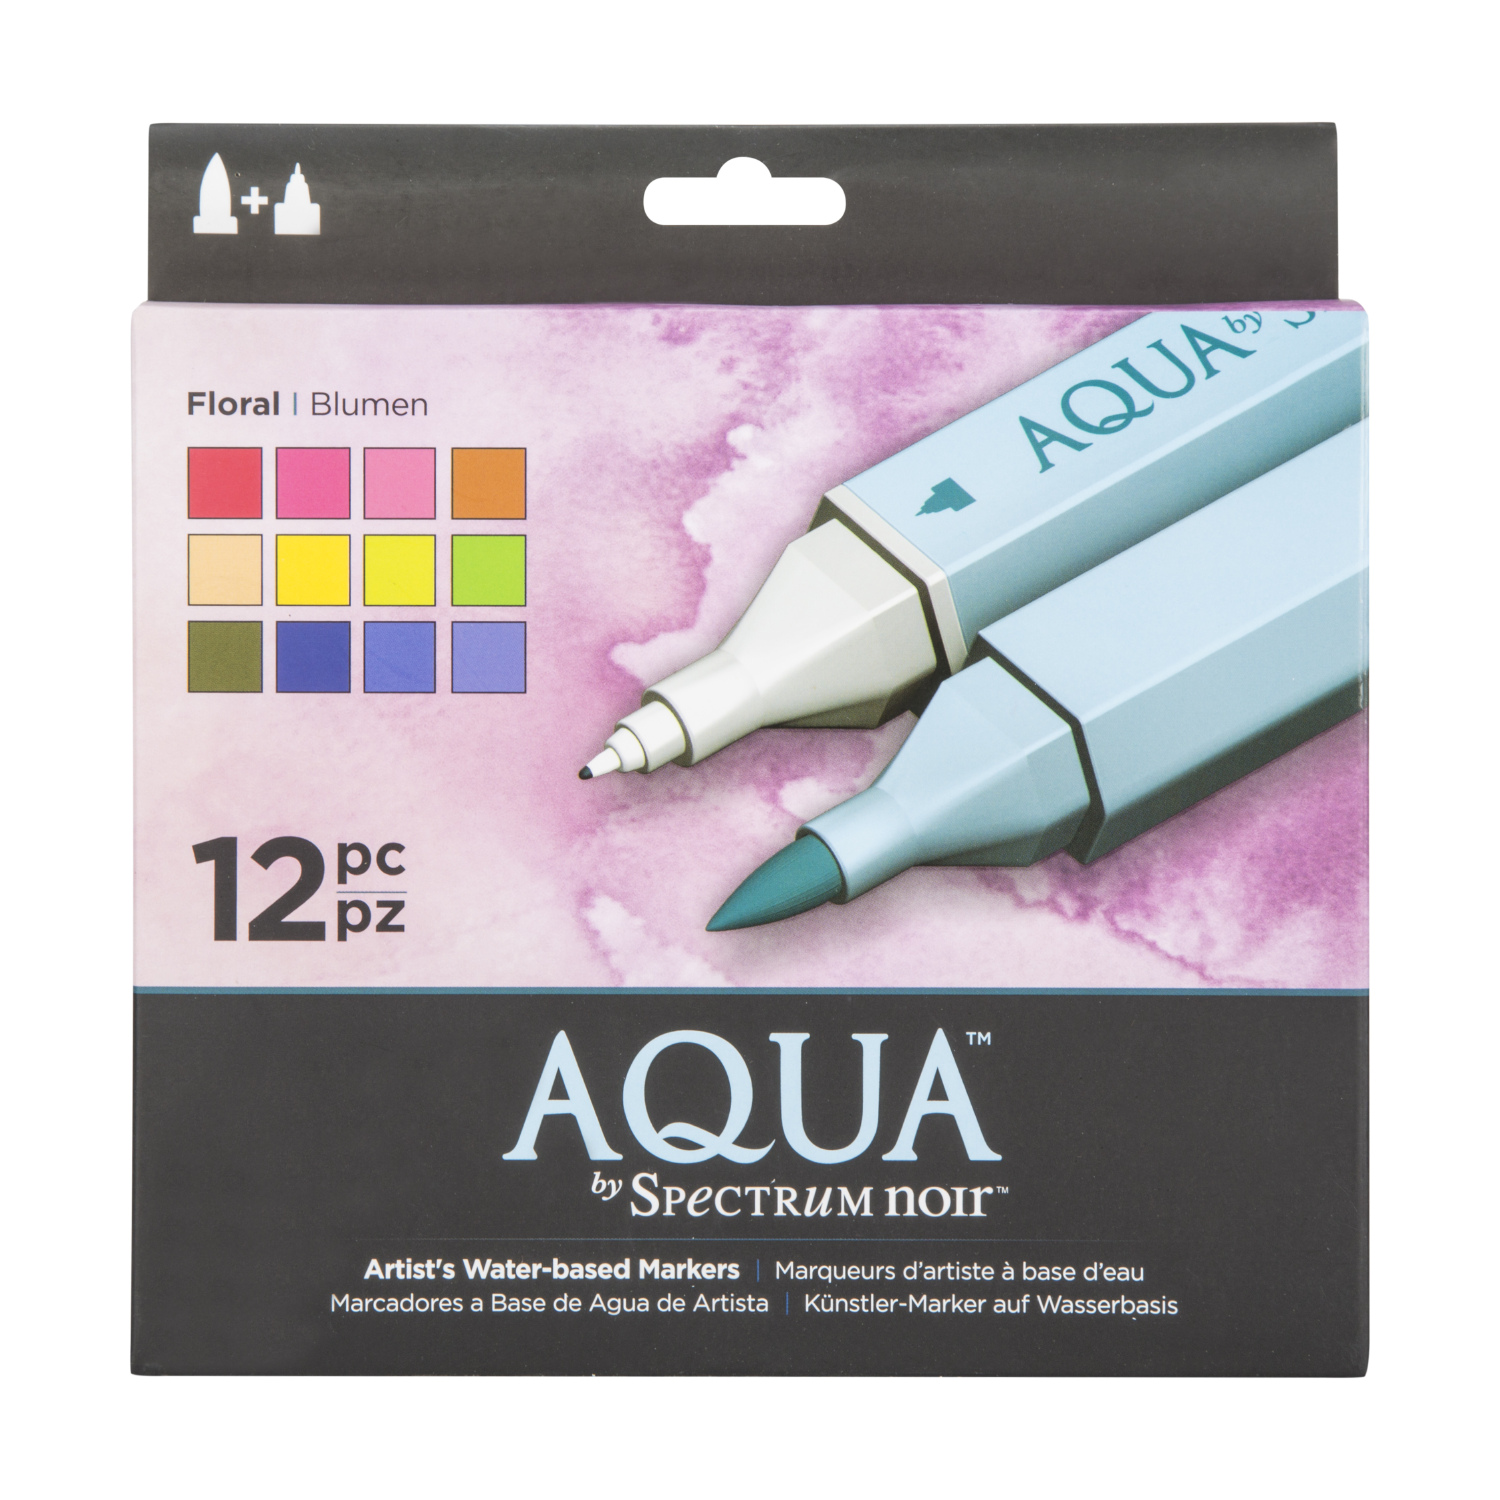 Pack of 12 Aqua Spectrum Noir Water-Based Markers - Floral Image